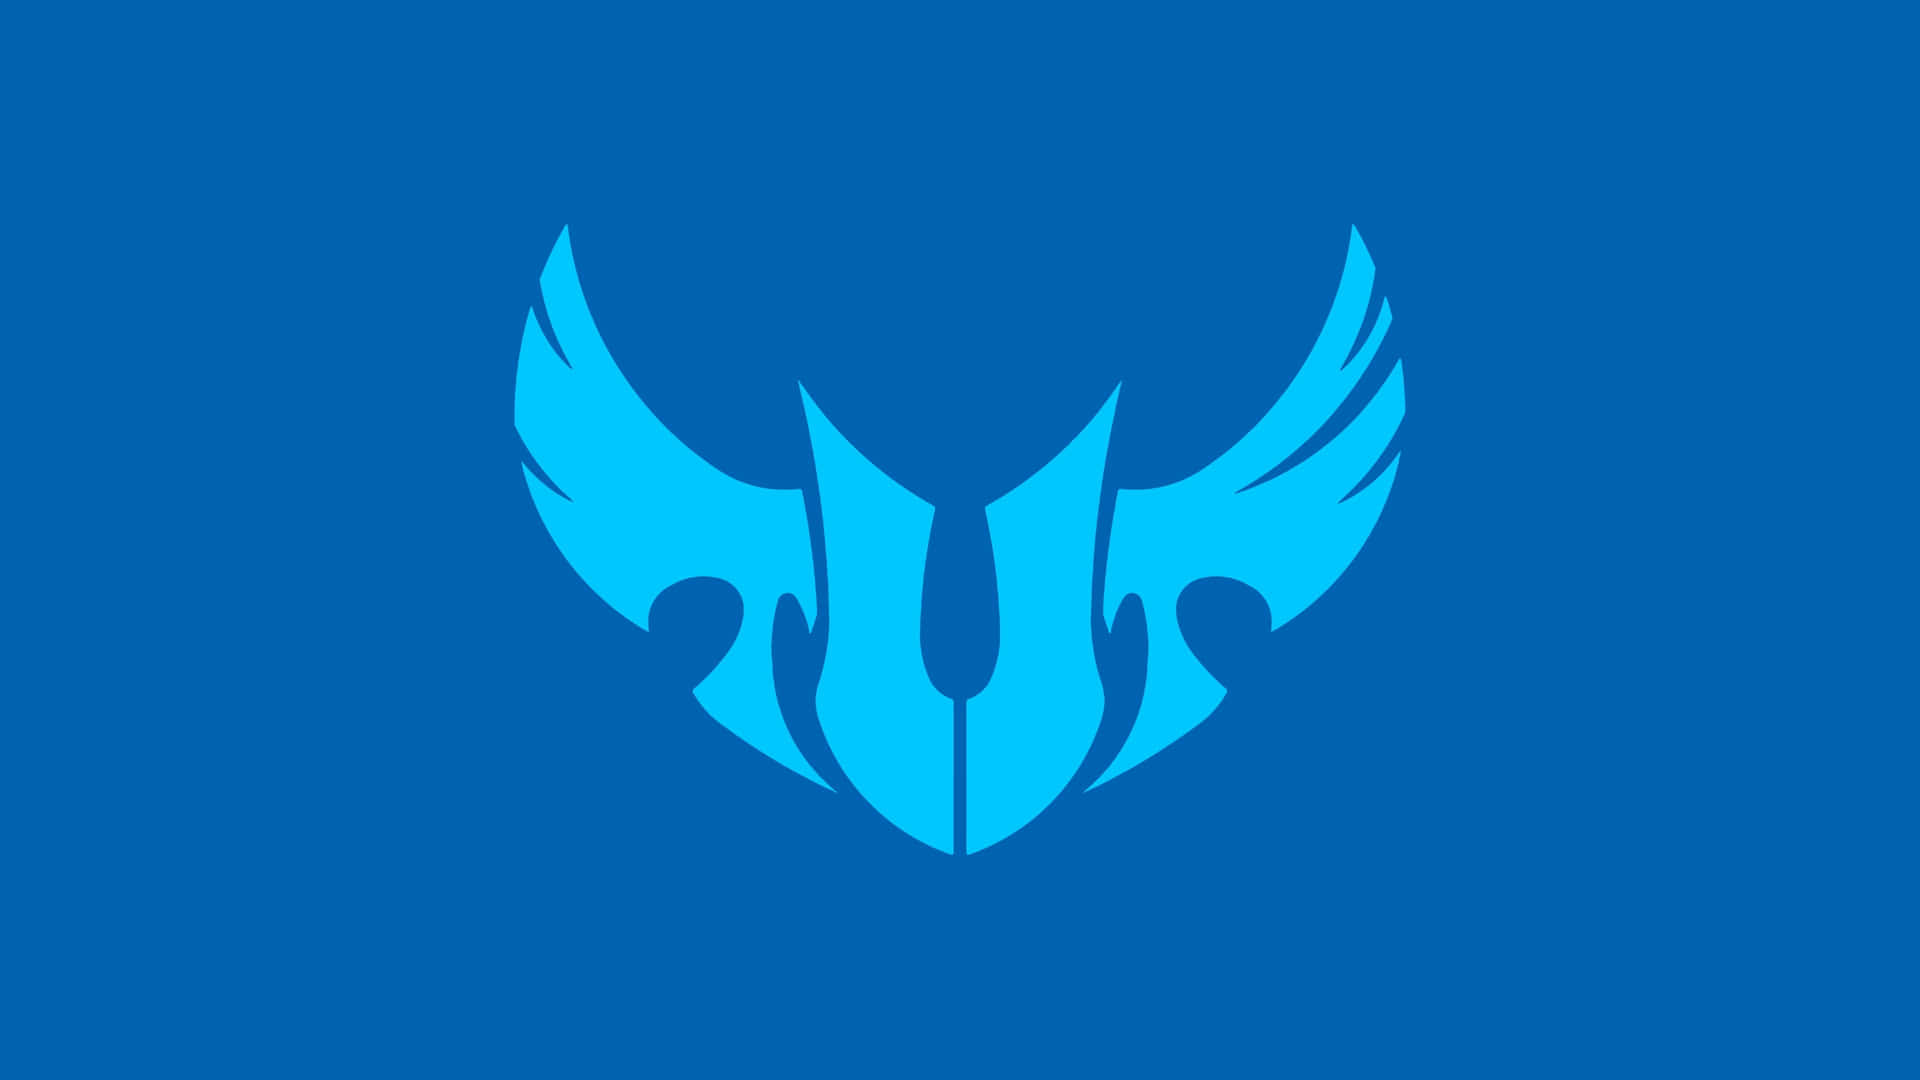 Asus T U F Gaming Logo Blue Background Background